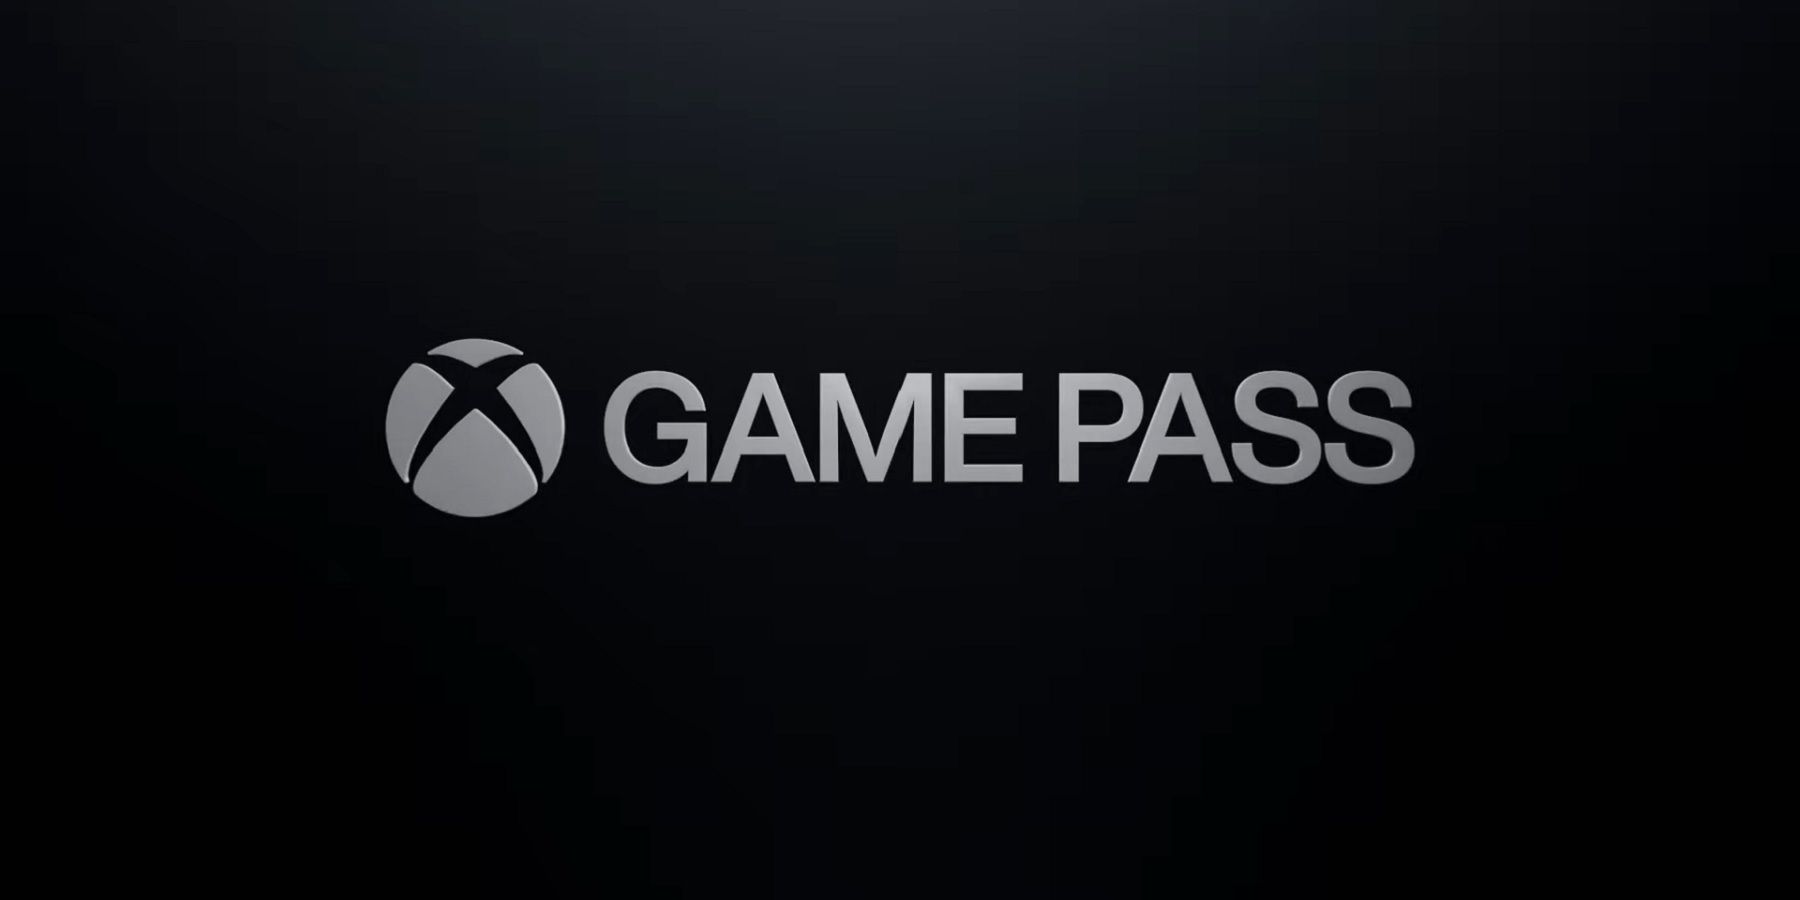 xbox game pass black and white logo